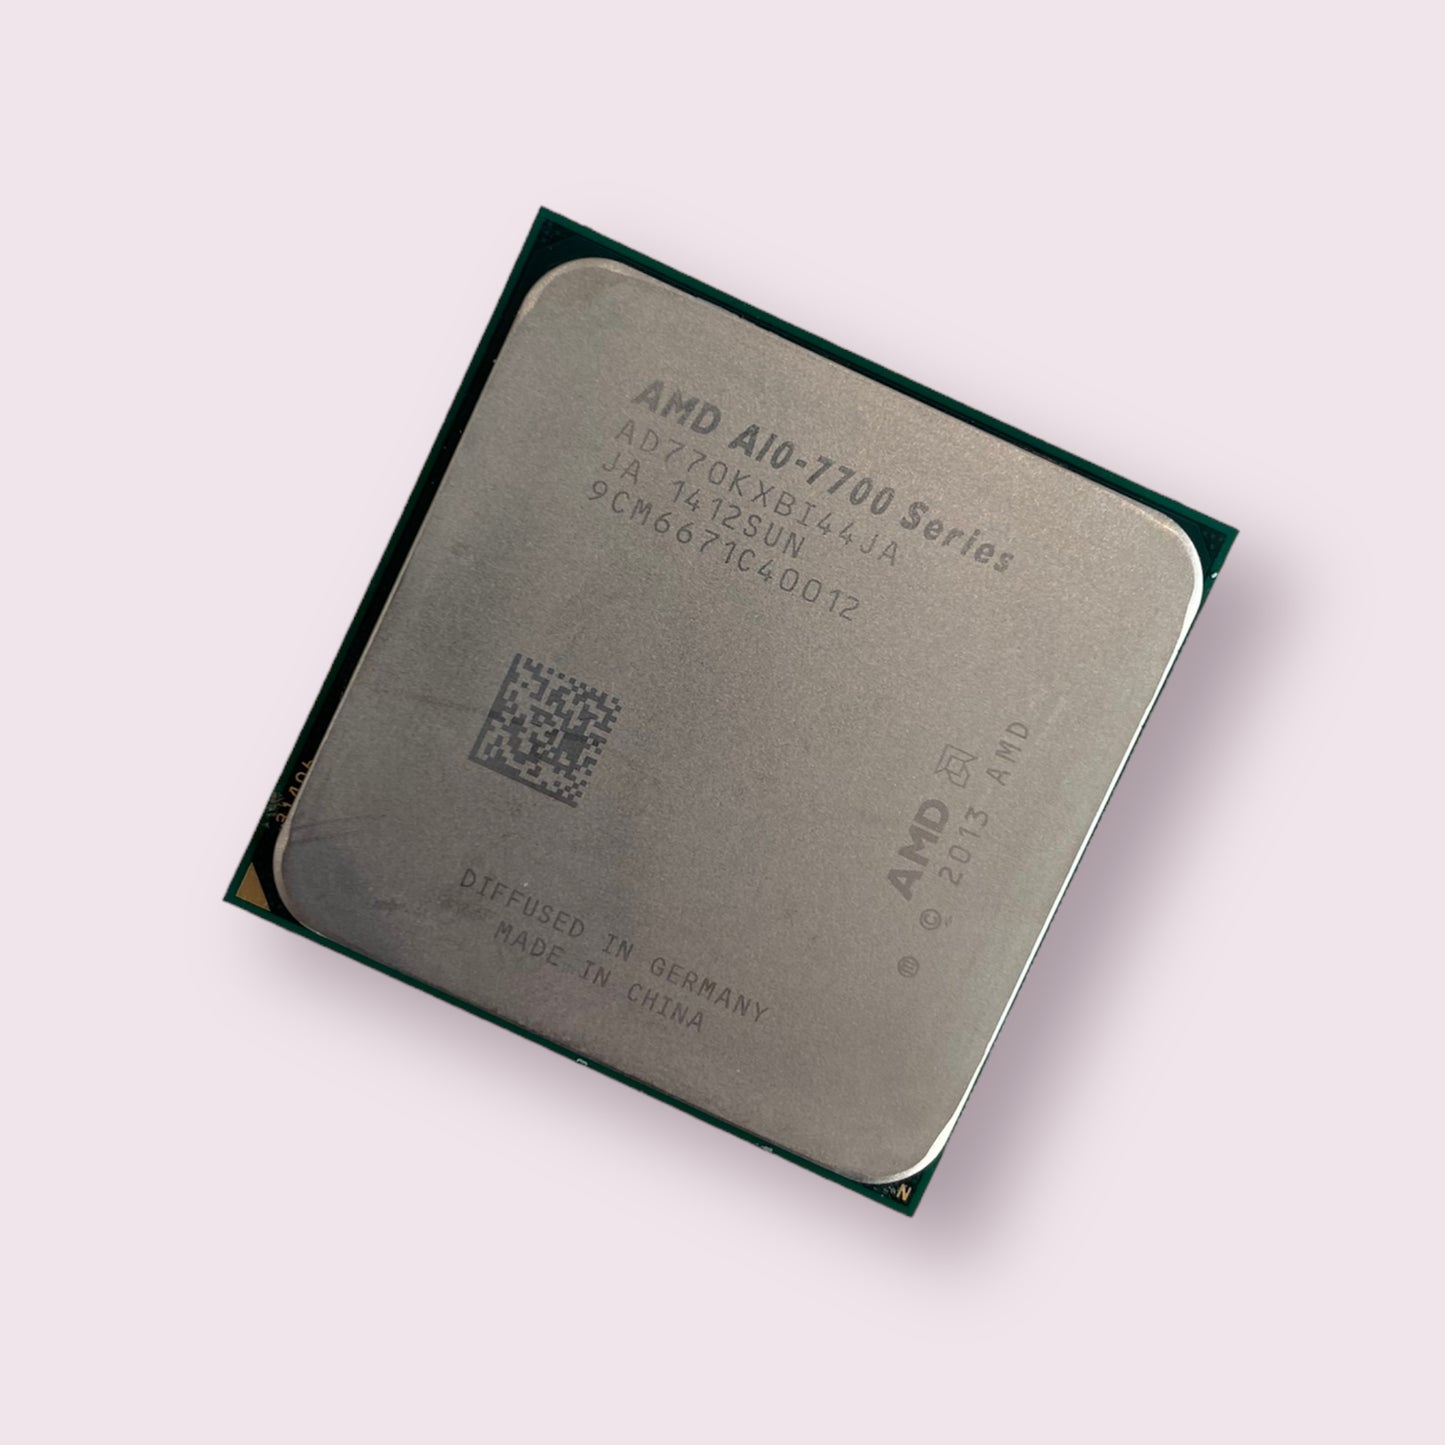 AMD A10-7700K  CPU Processor Socket FM2+ 3.40GHz Quad Core - Used - Genuine Pull Part